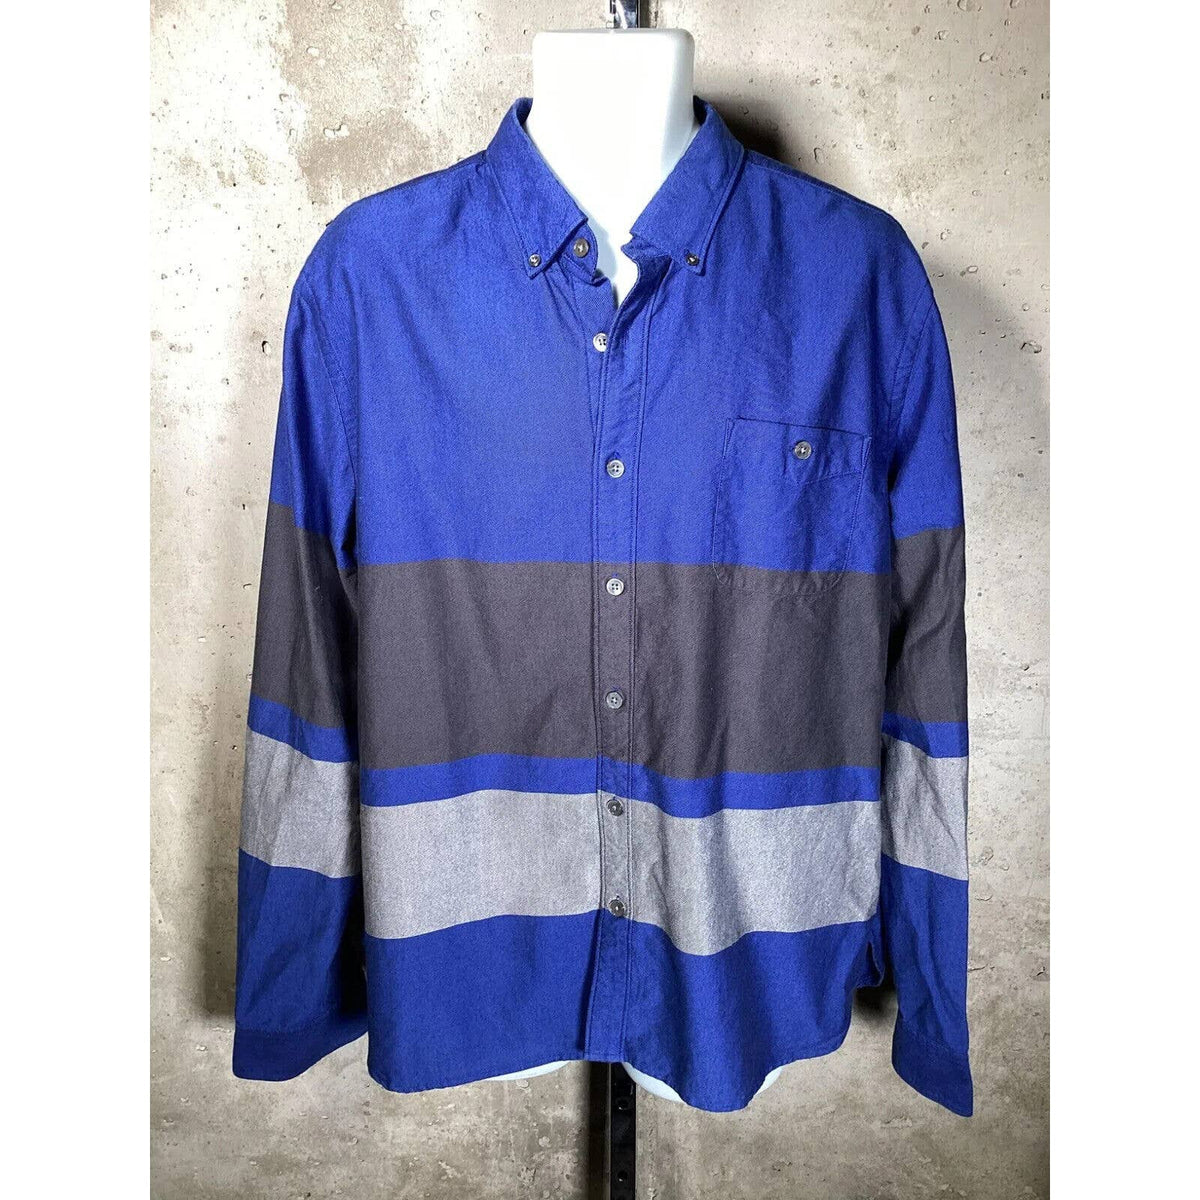 Todd Snyder Blue Patterned Shirt Sz. XL